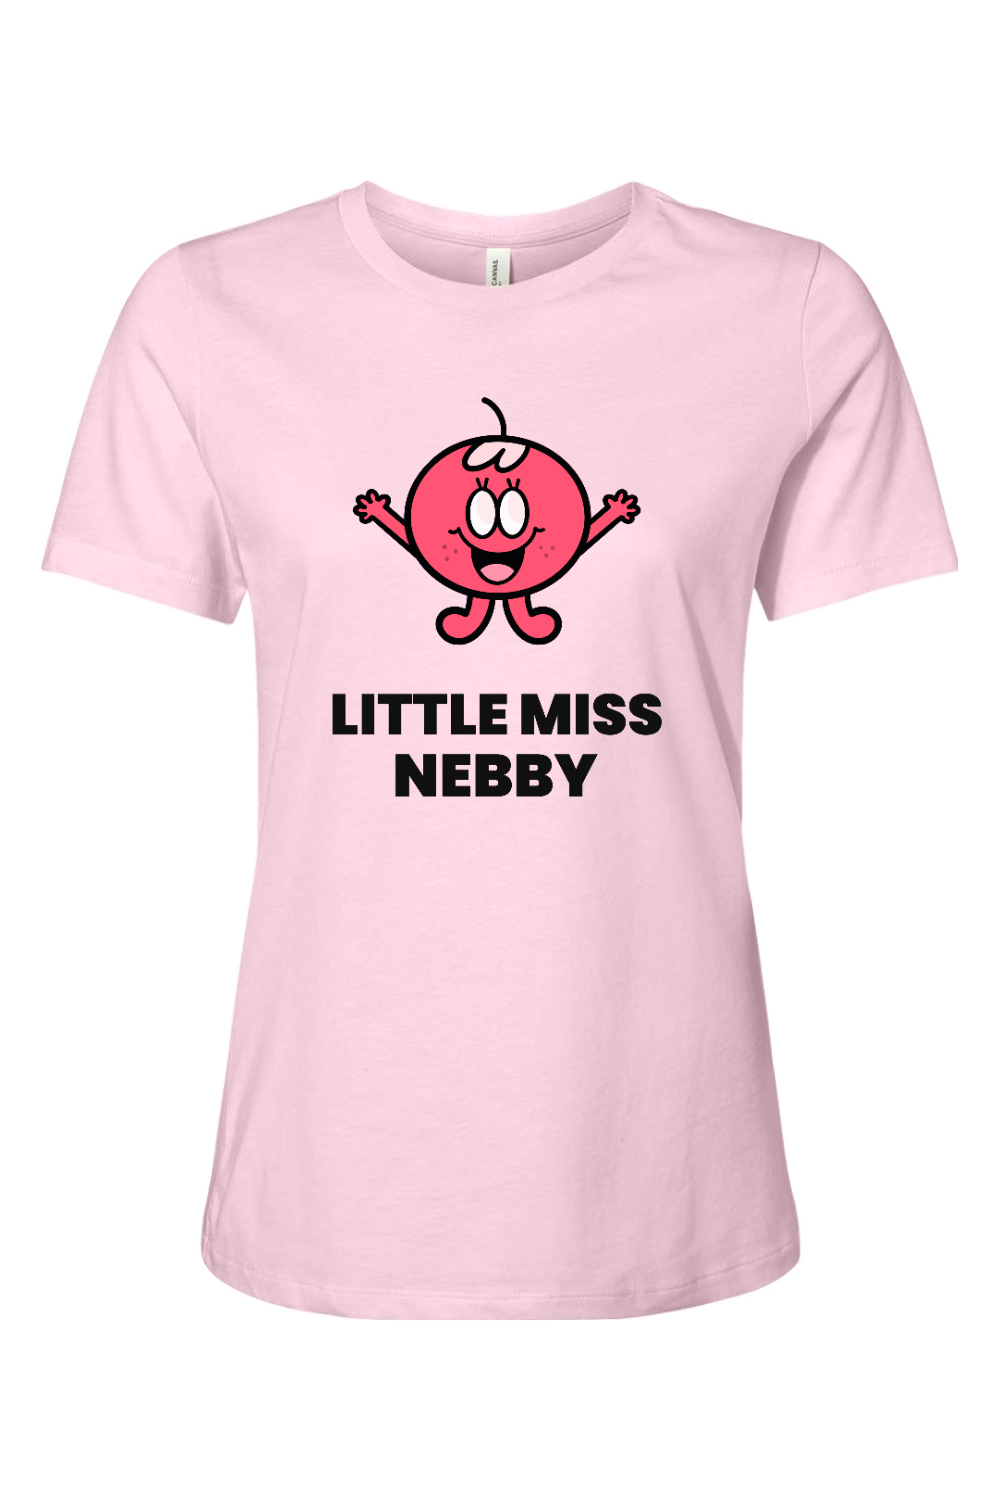 Little Miss Nebby - Ladies Tee - Yinzylvania